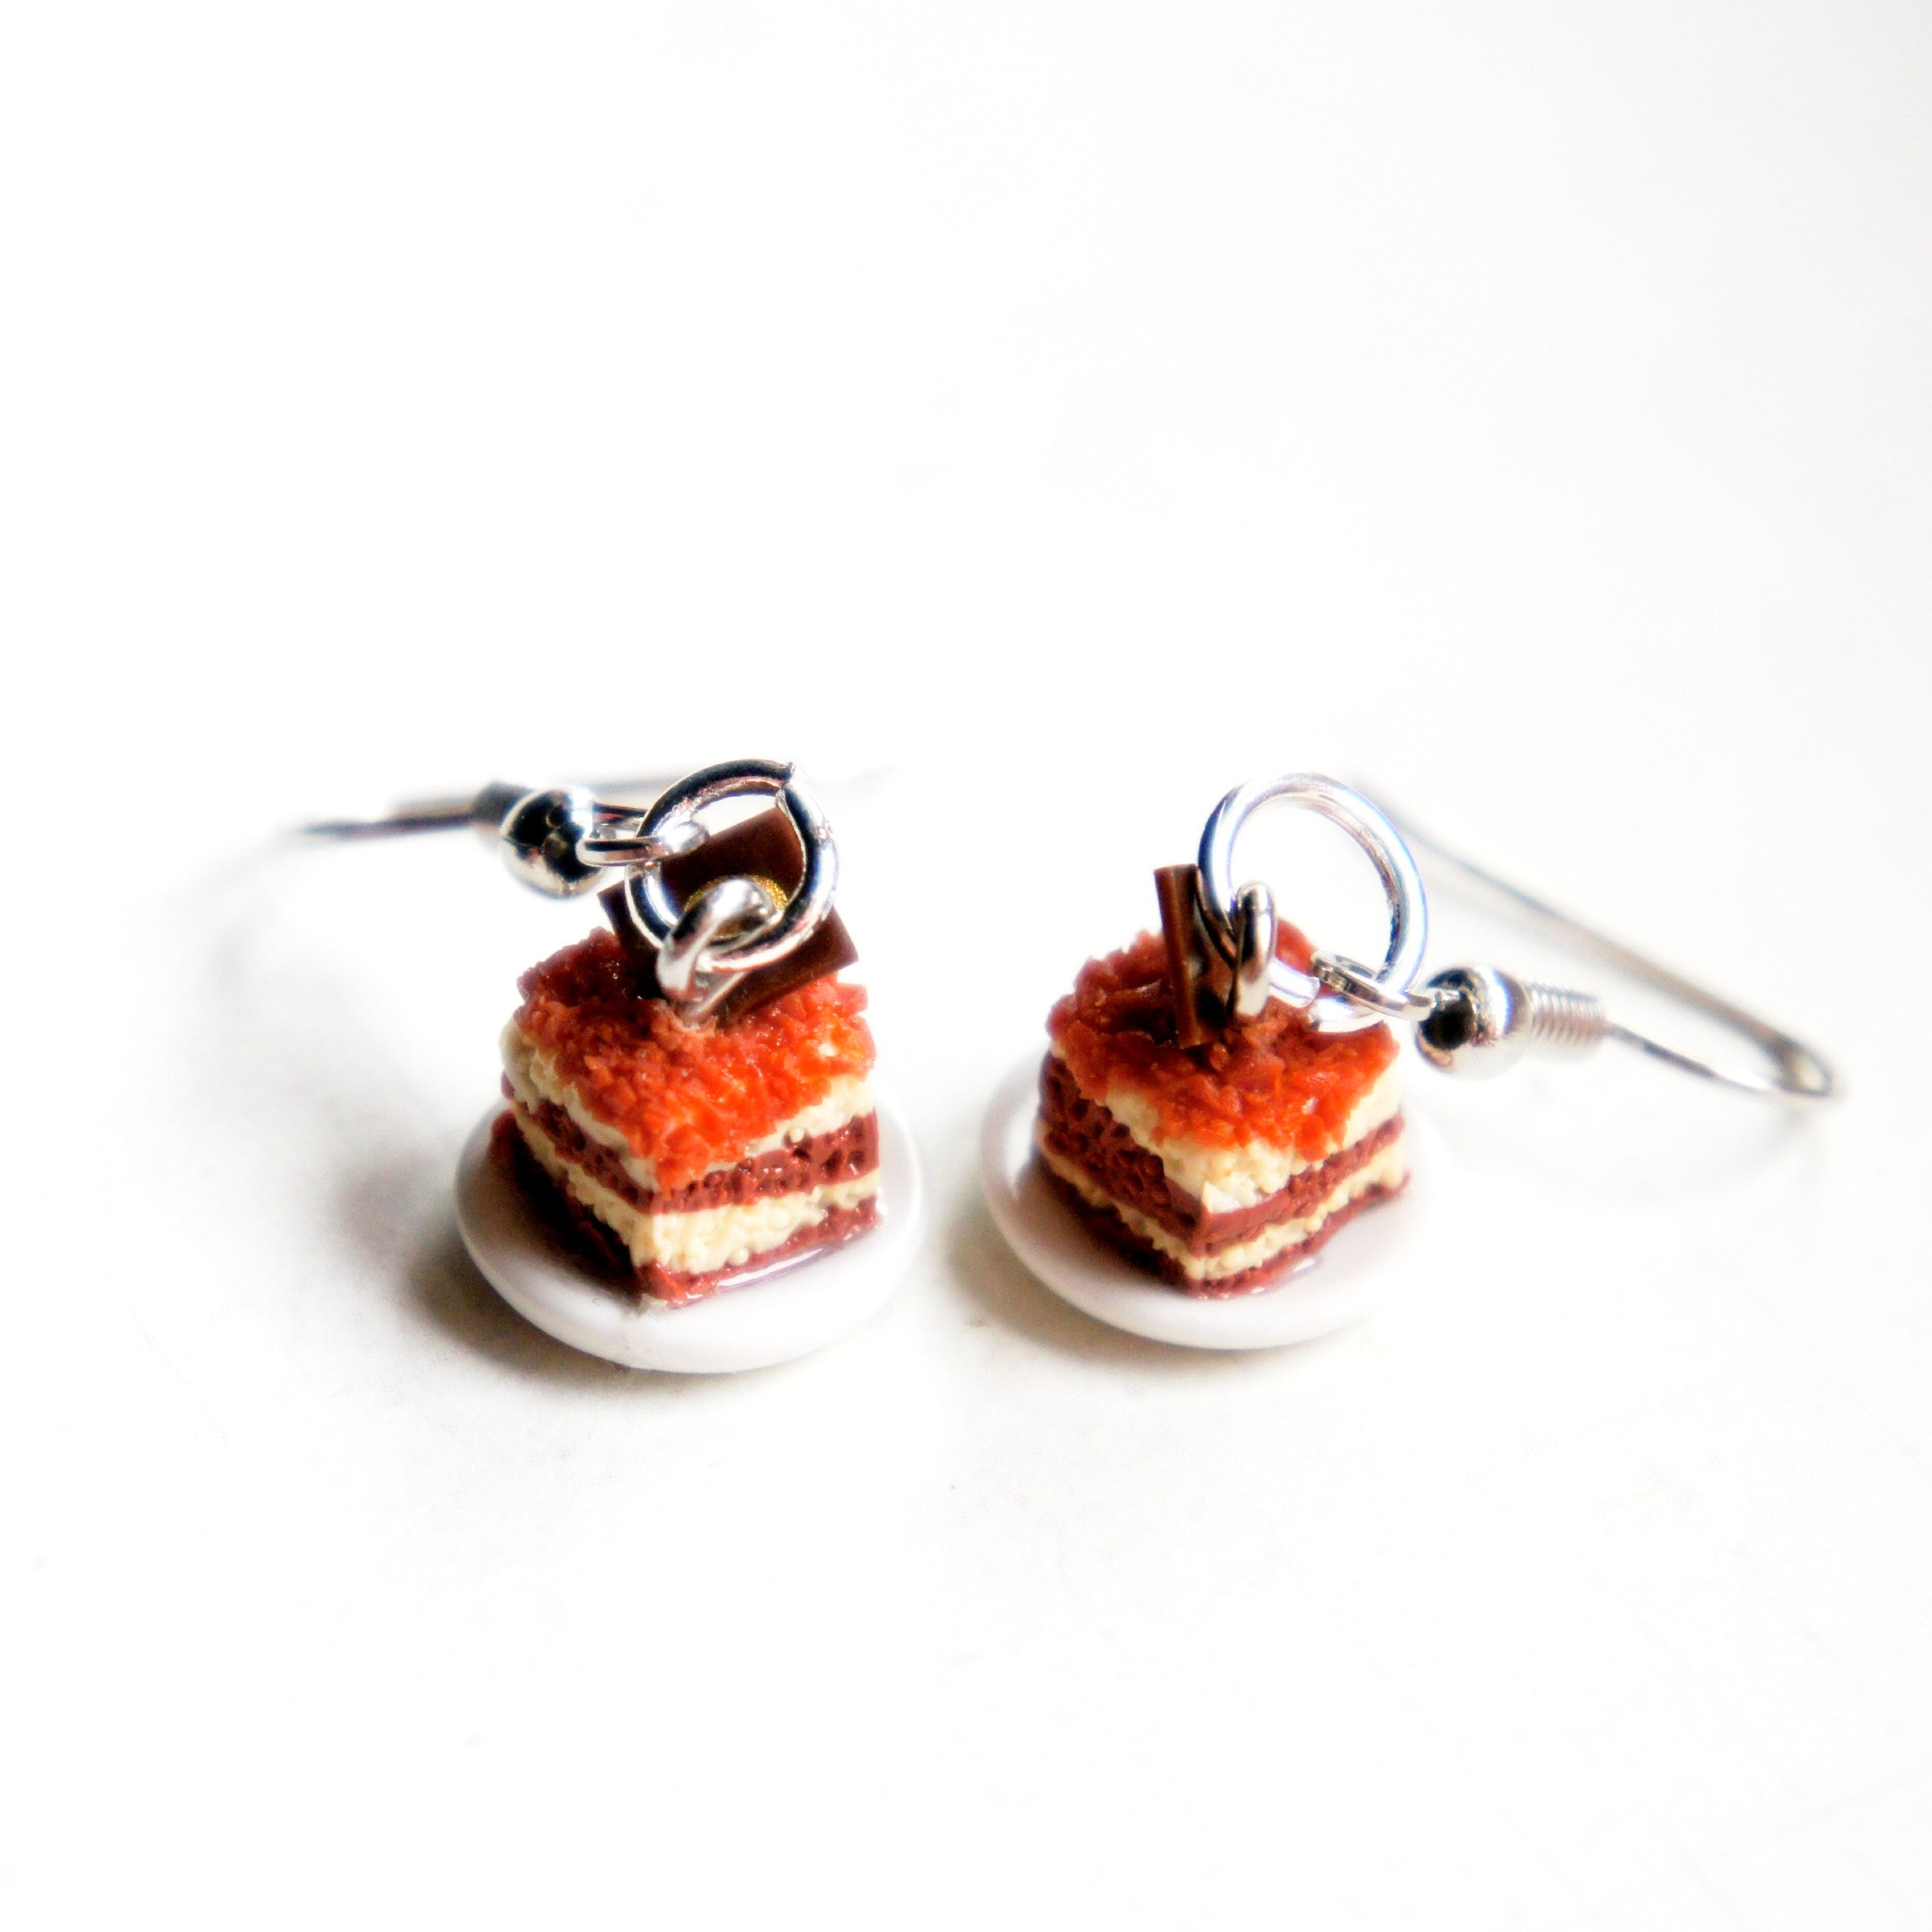 Tiramisu Dangle Earrings - Jillicious charms and accessories